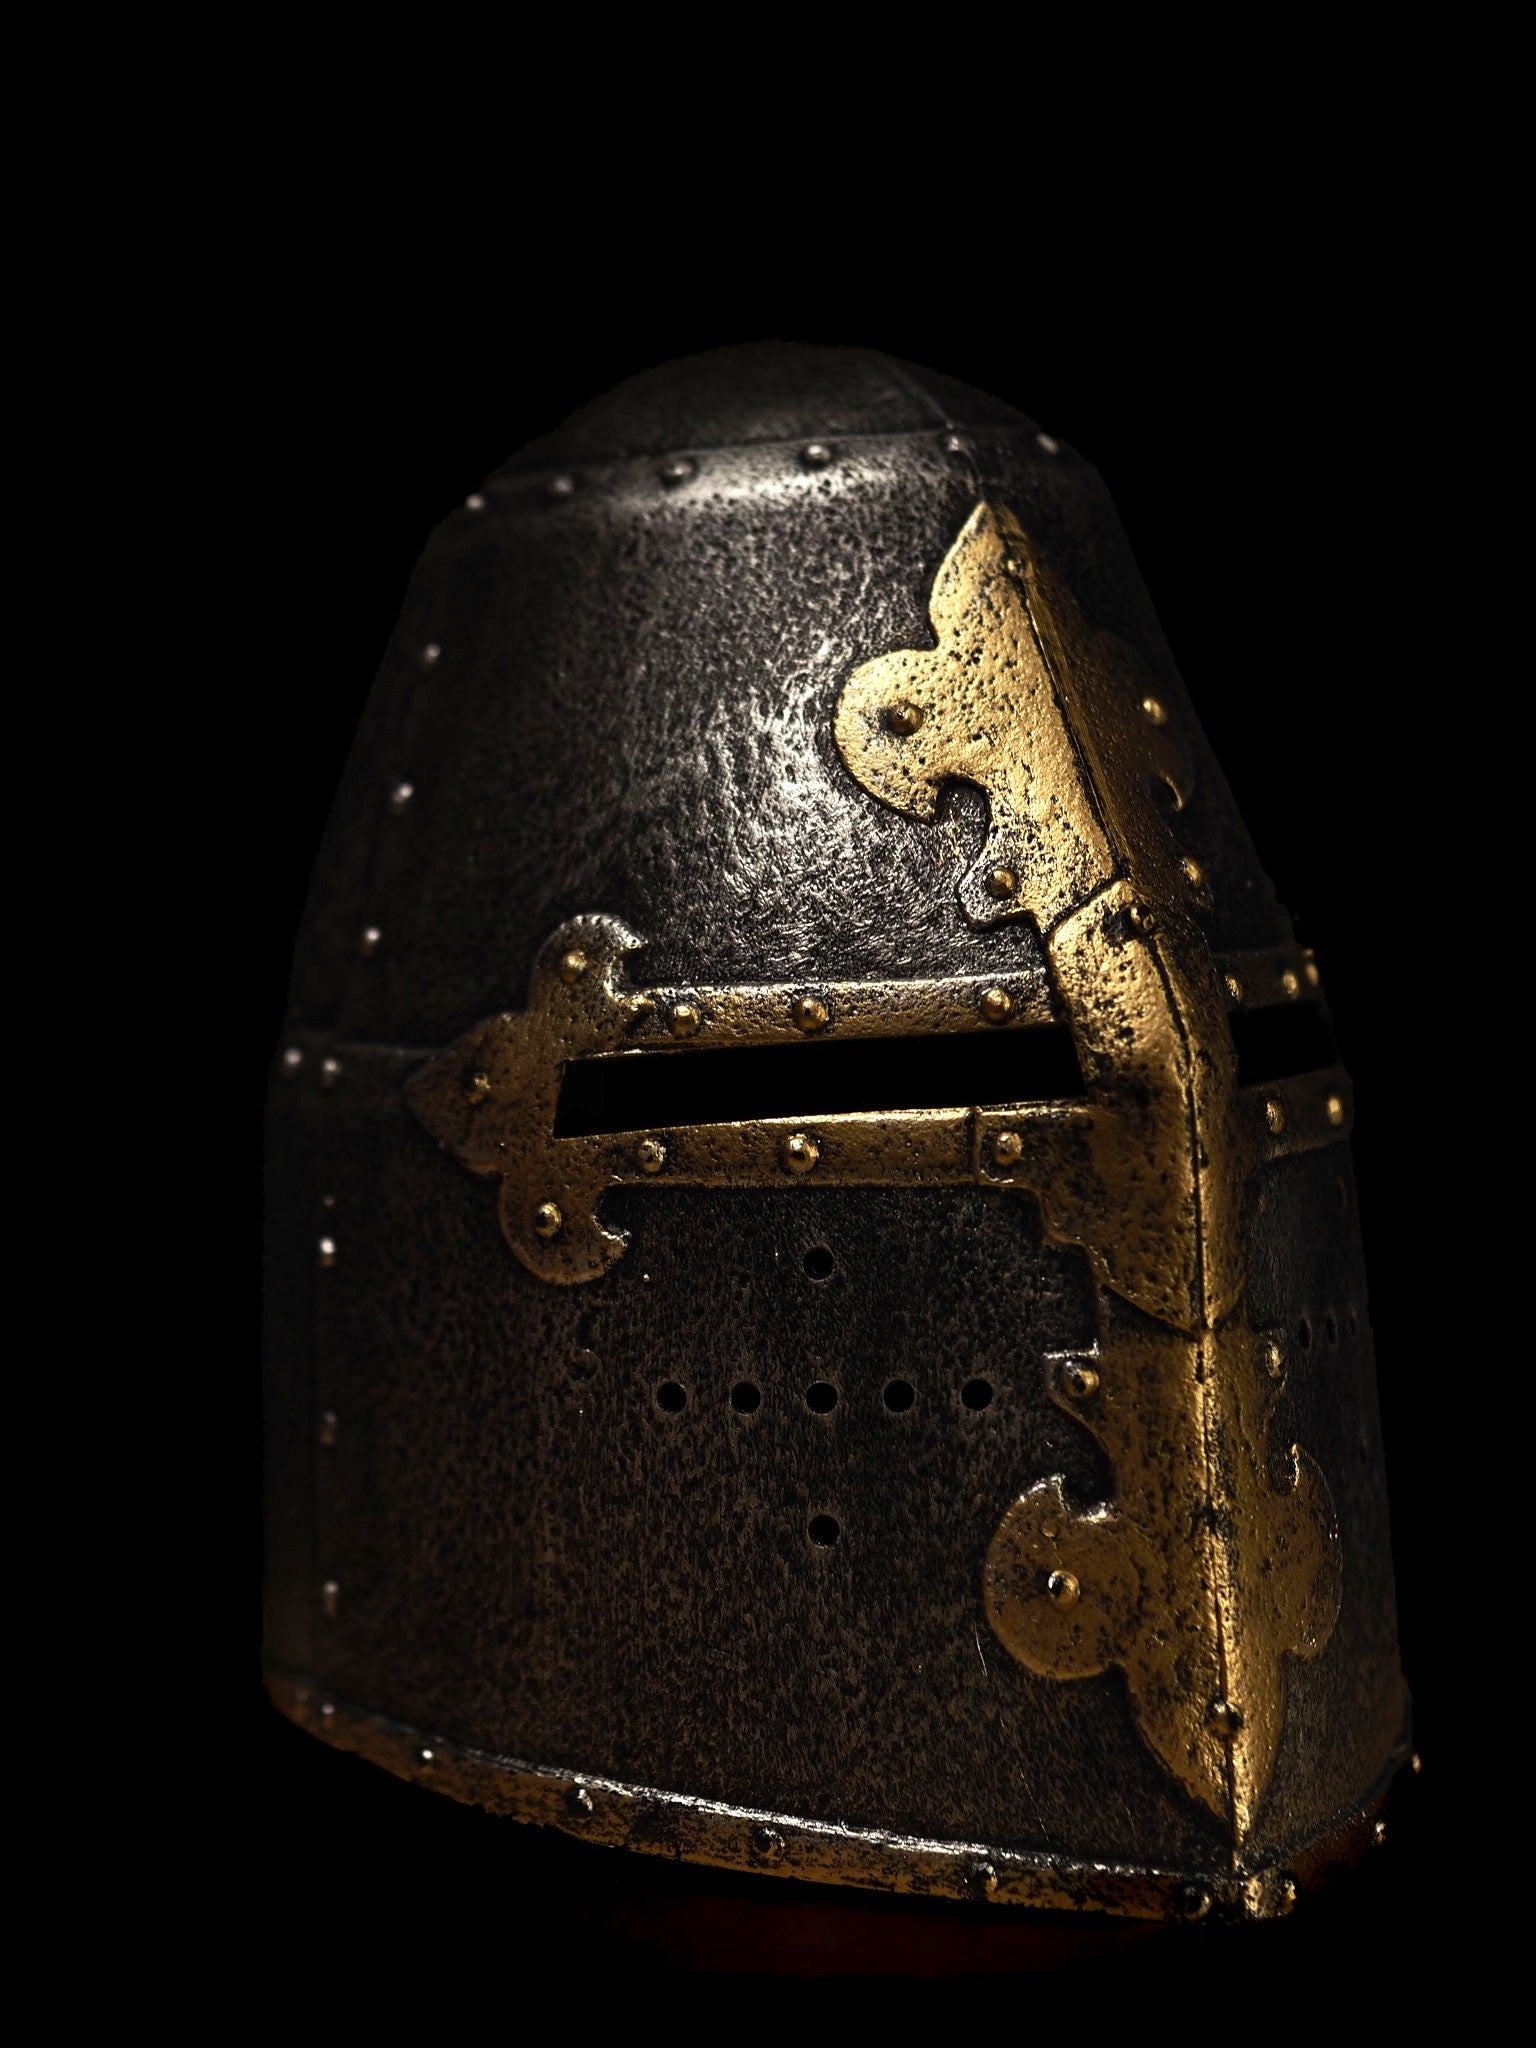 Toy helmet, knight